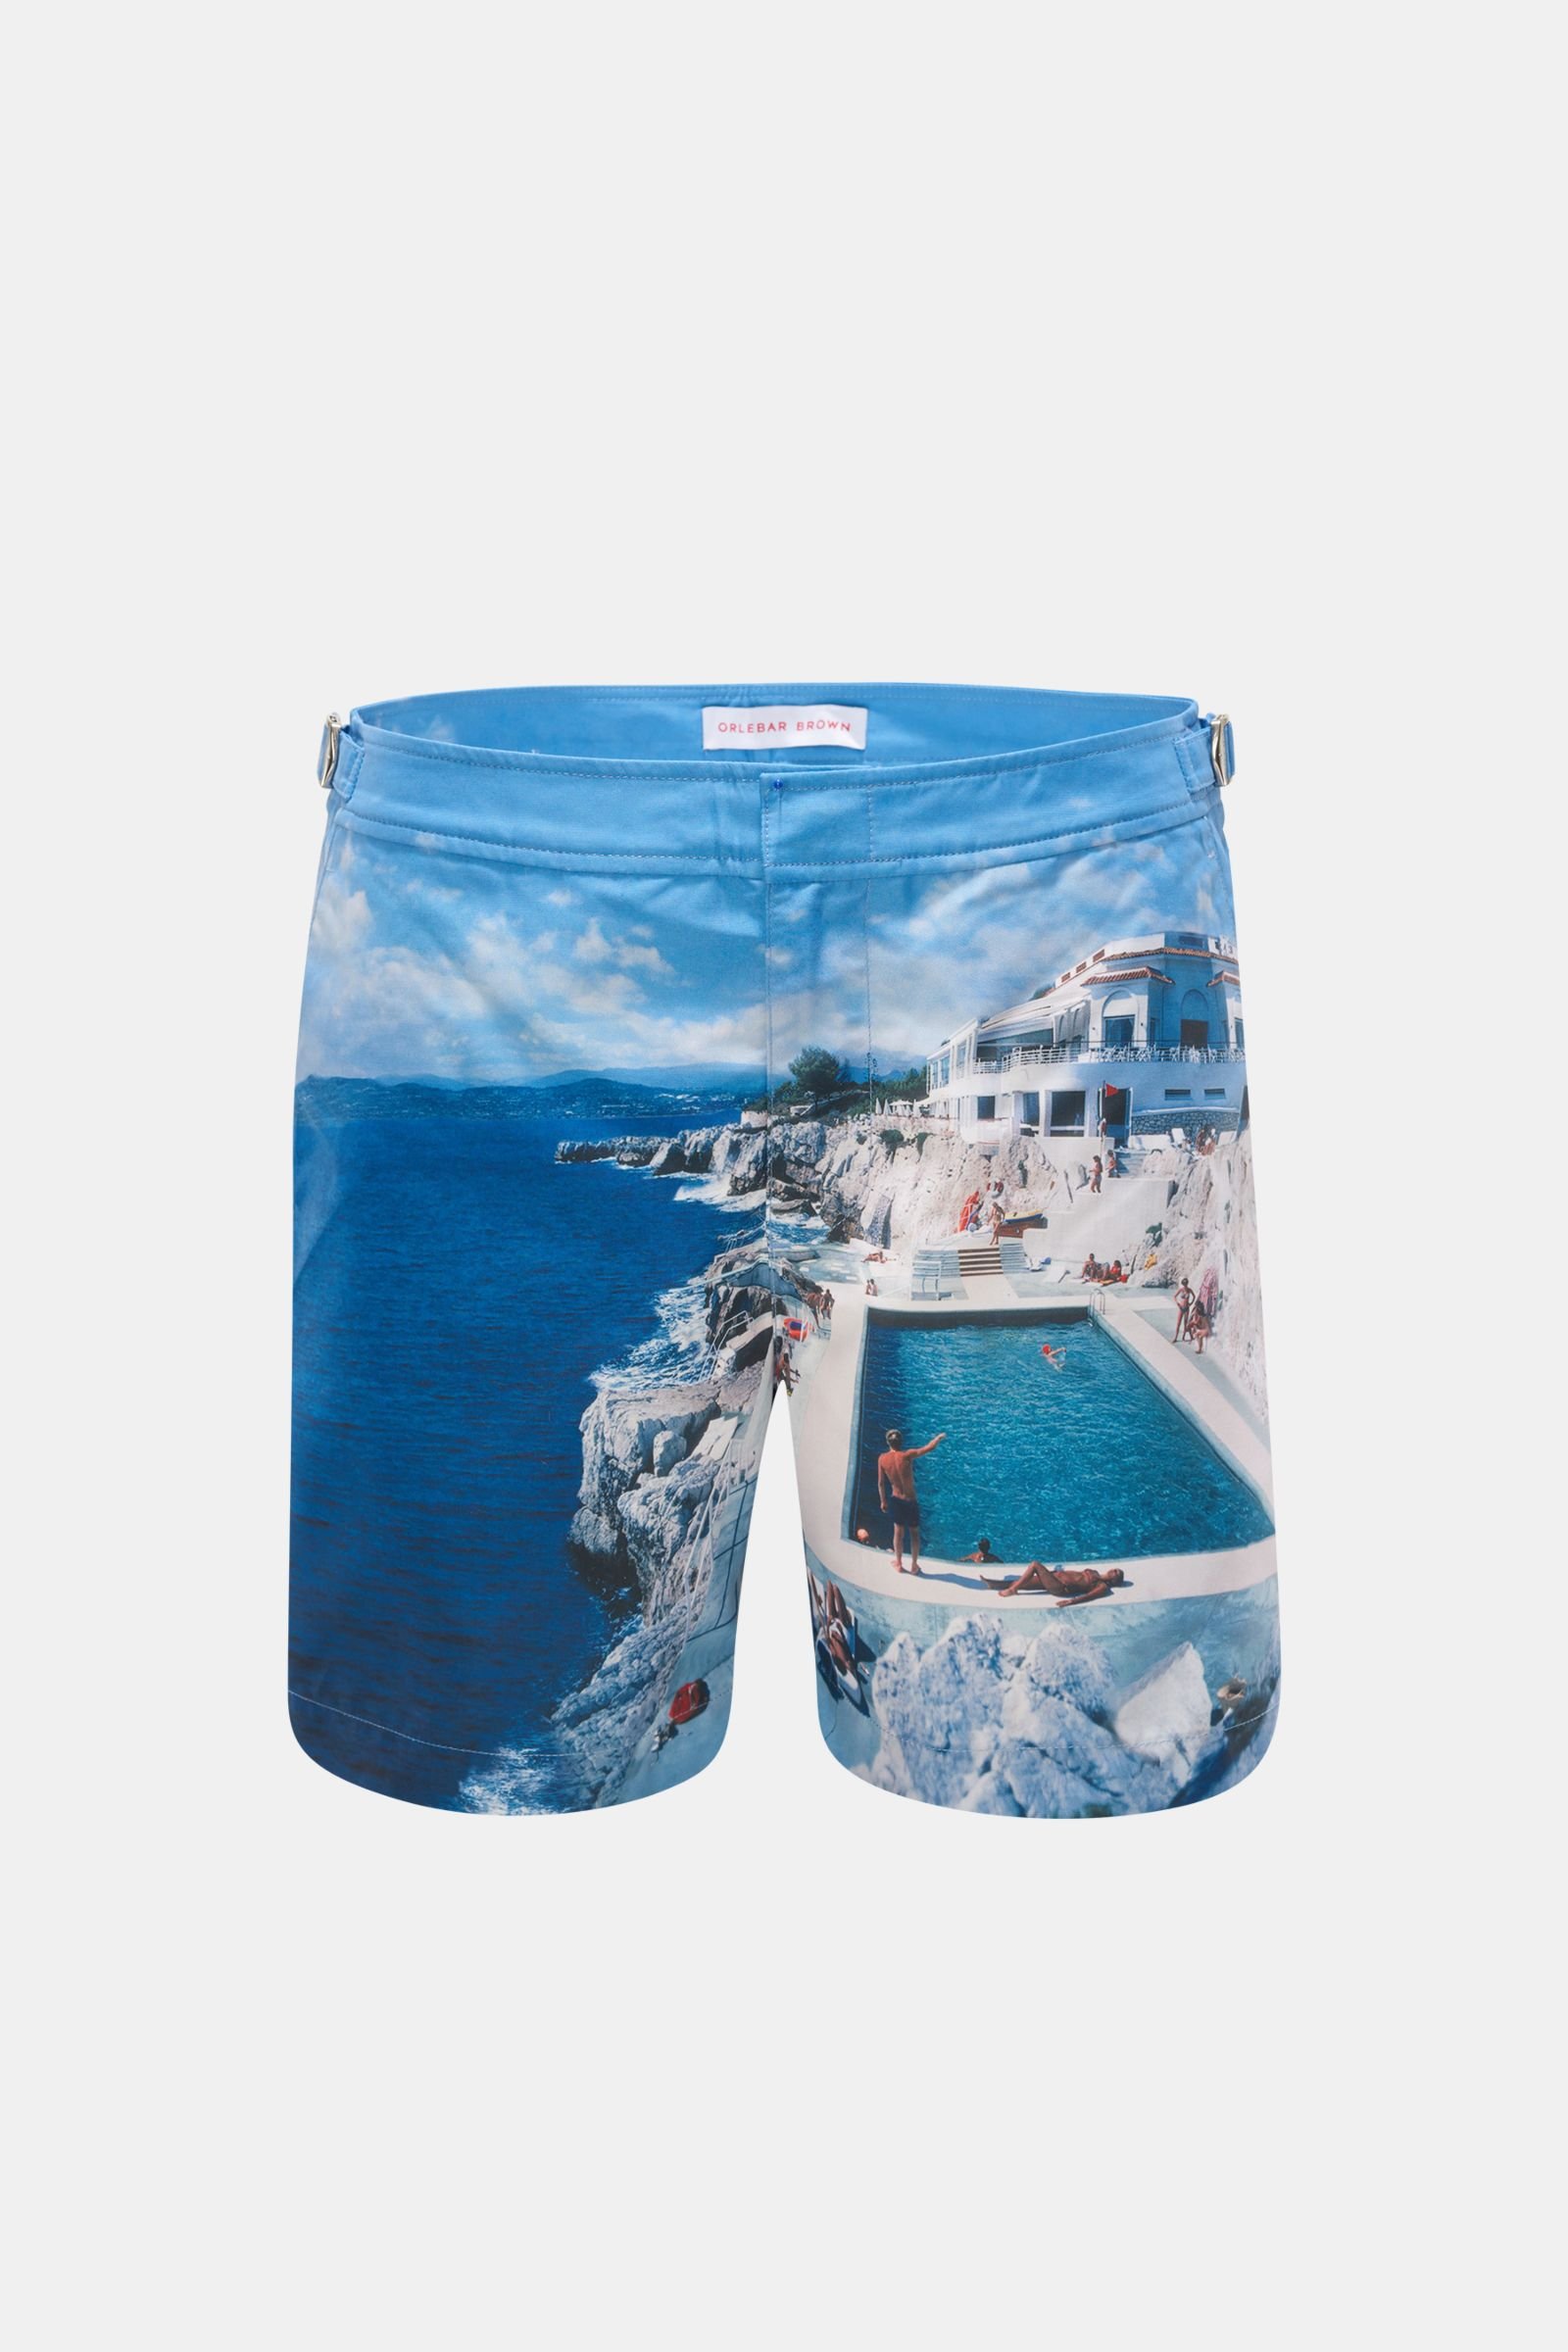 Swim shorts 'Bulldog Roc Pool' blue patterned